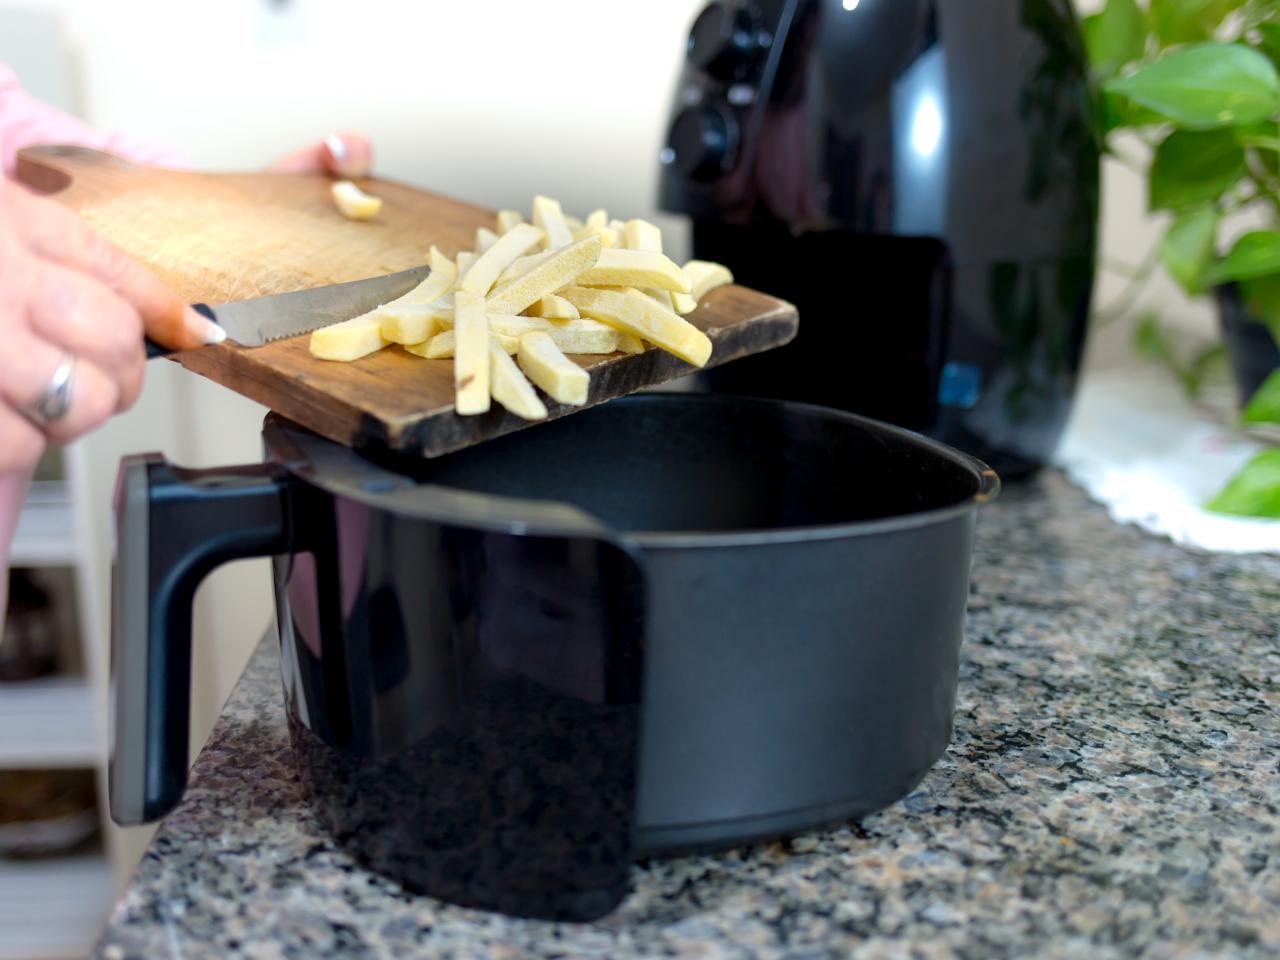 Ninja Foodi 2 Basket Air Fryer Review - Also The Crumbs Please